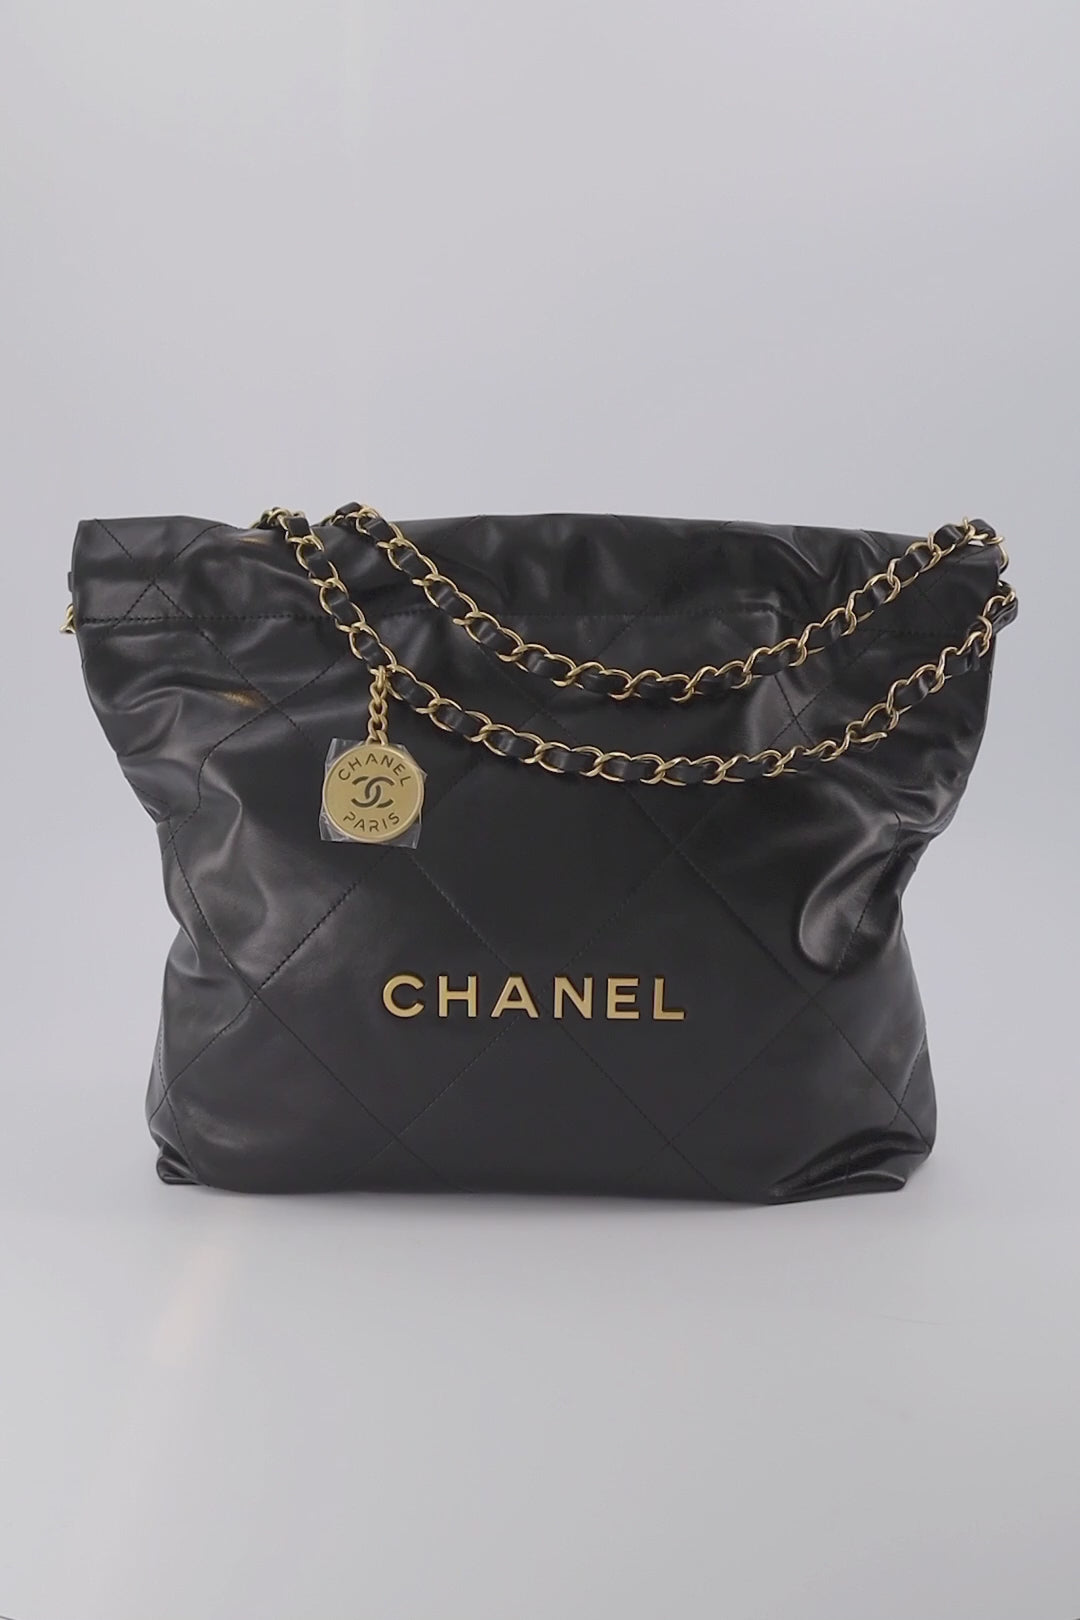 chanel 22 bag black